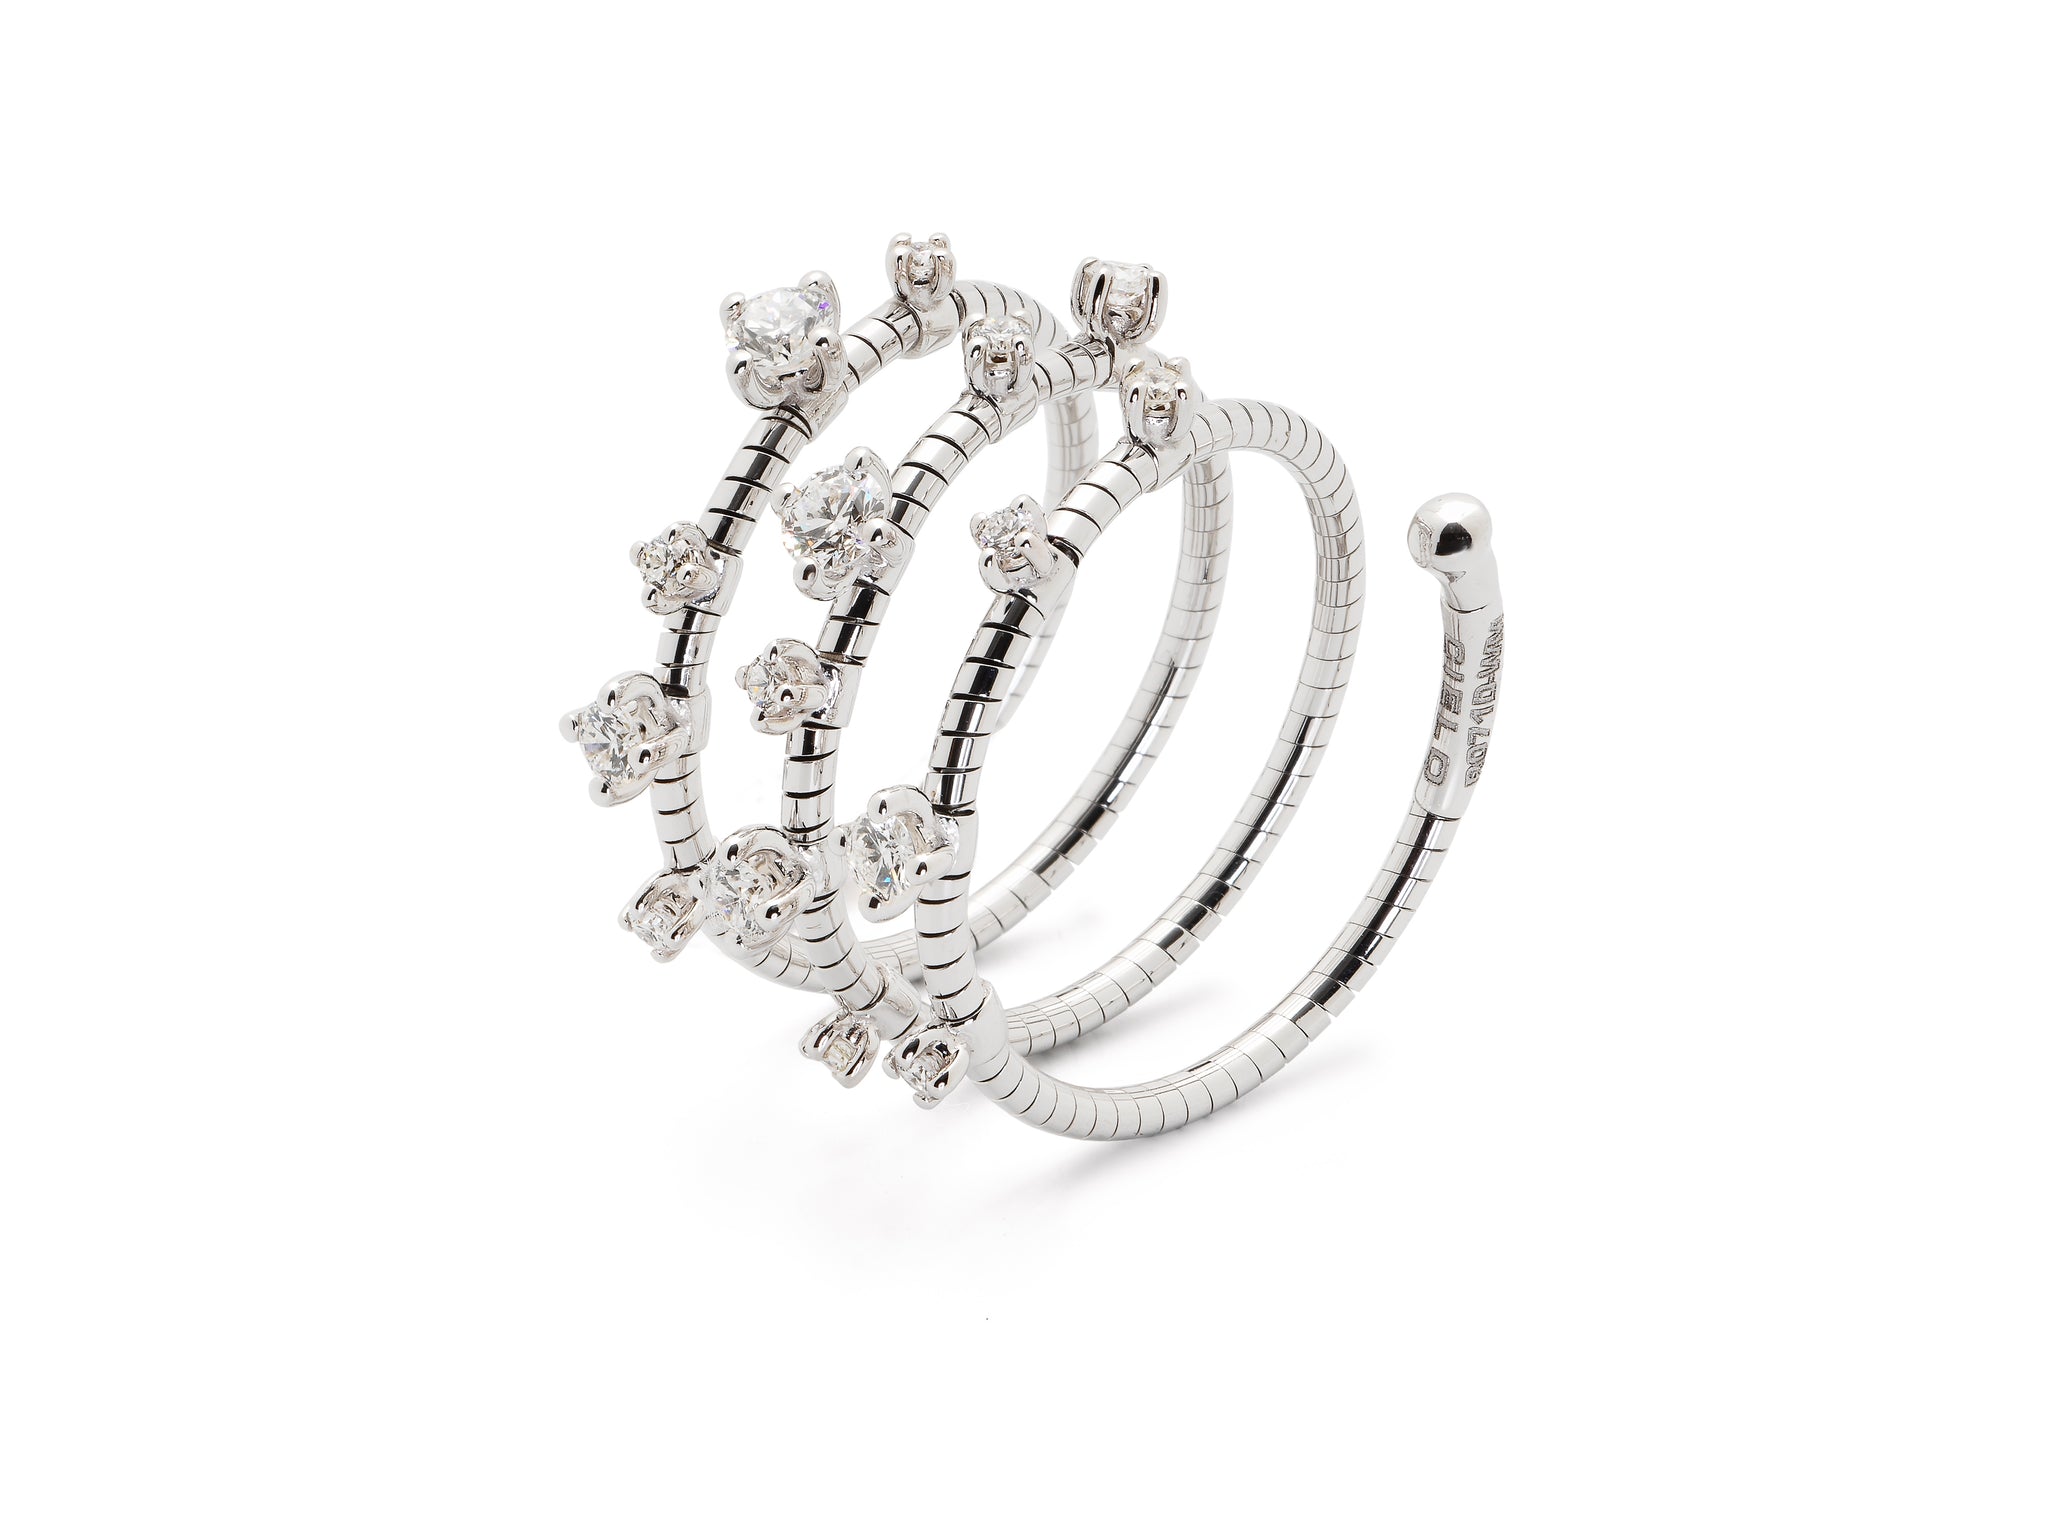 18 krt white gold spiral ring set with 15 brilliant diamonds